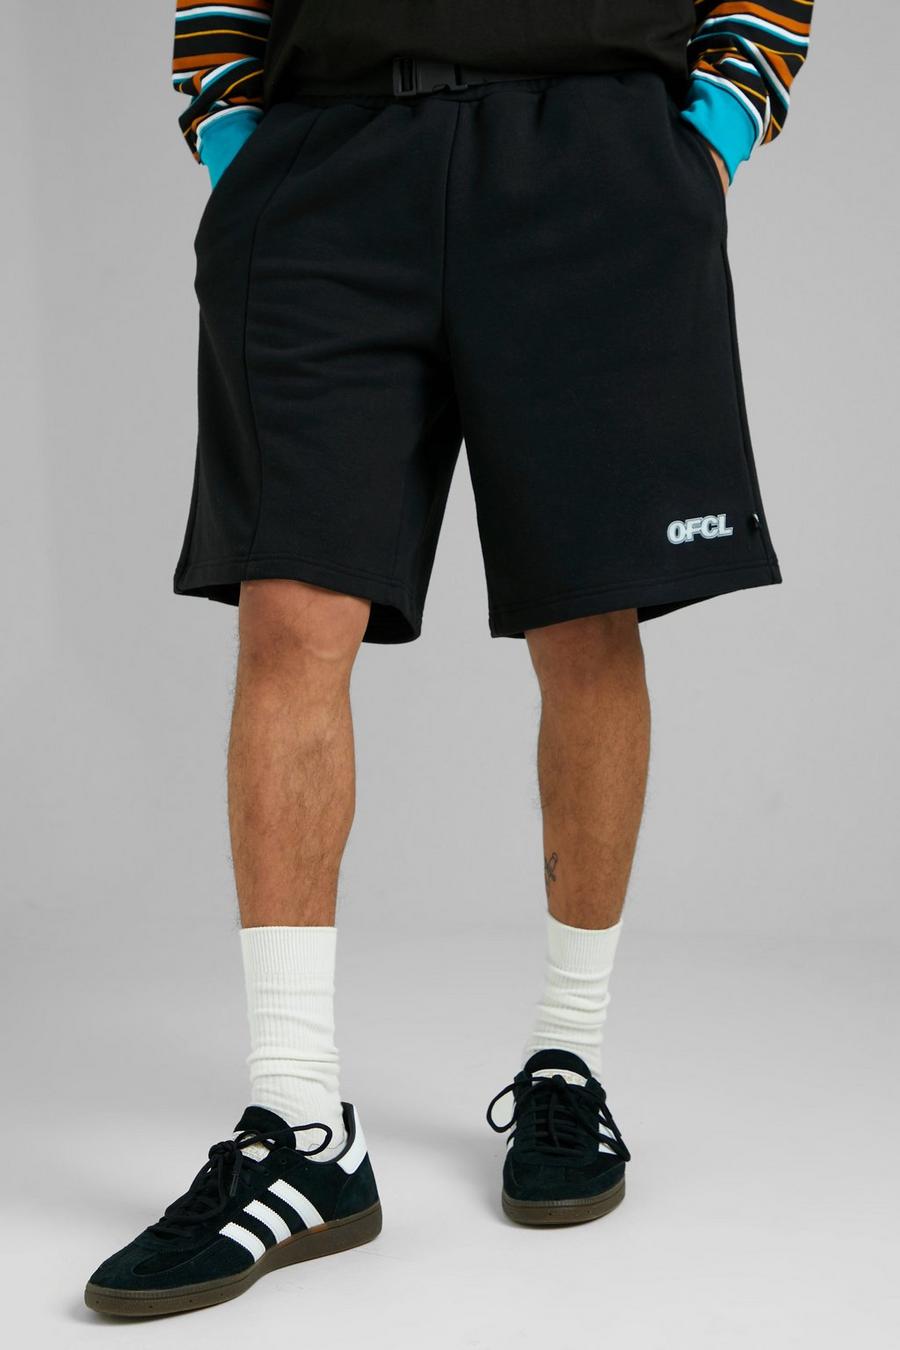 Pantalón corto de baloncesto Ofcl de tela jersey, Black nero